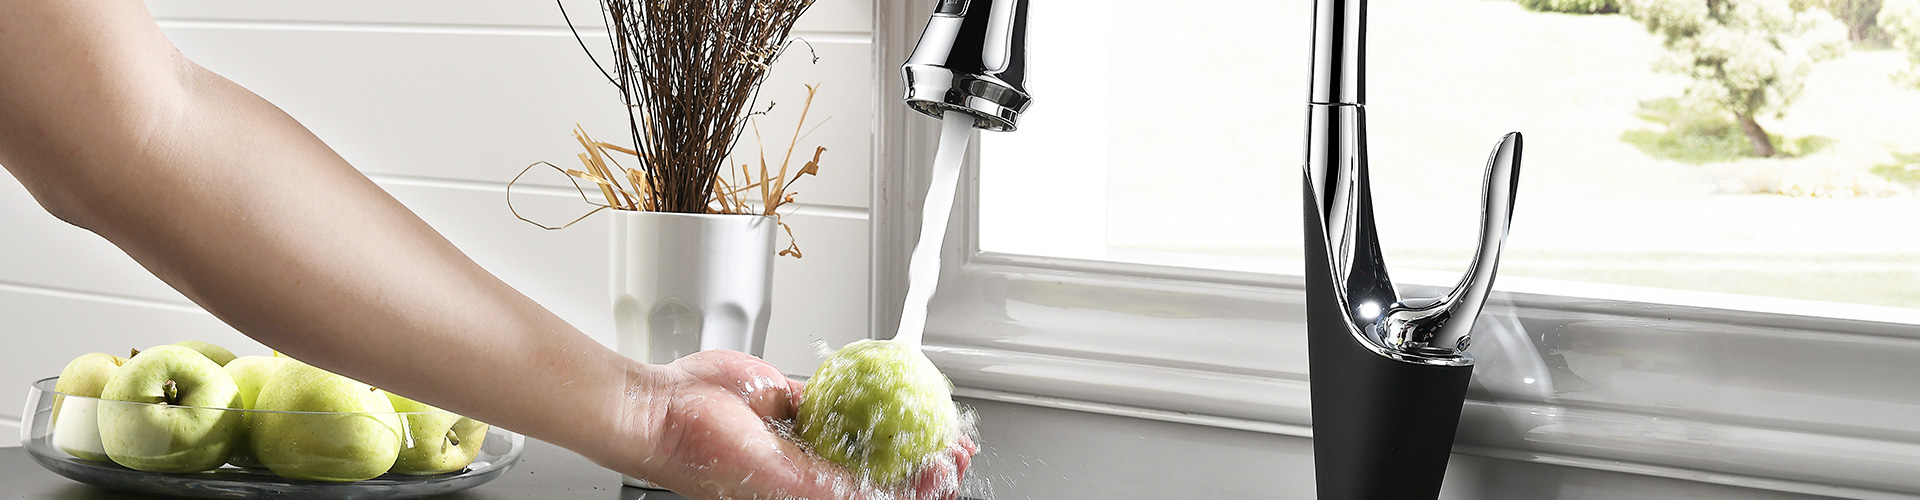 Lead-free Sanitary Wallmount Faucet